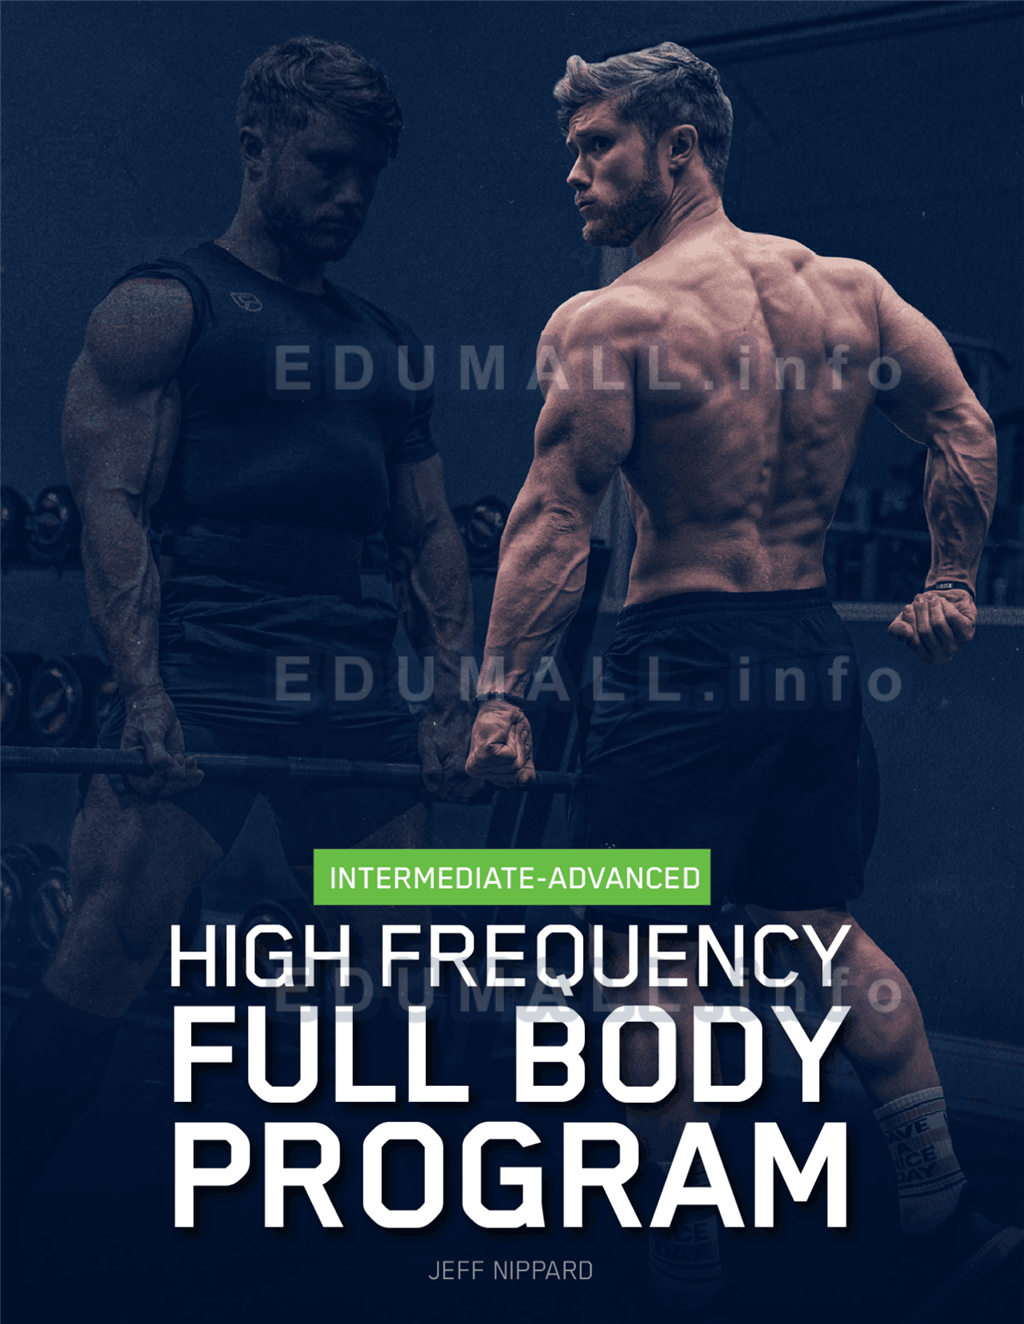 Jeff Nippard - Full Body High Frequency Program